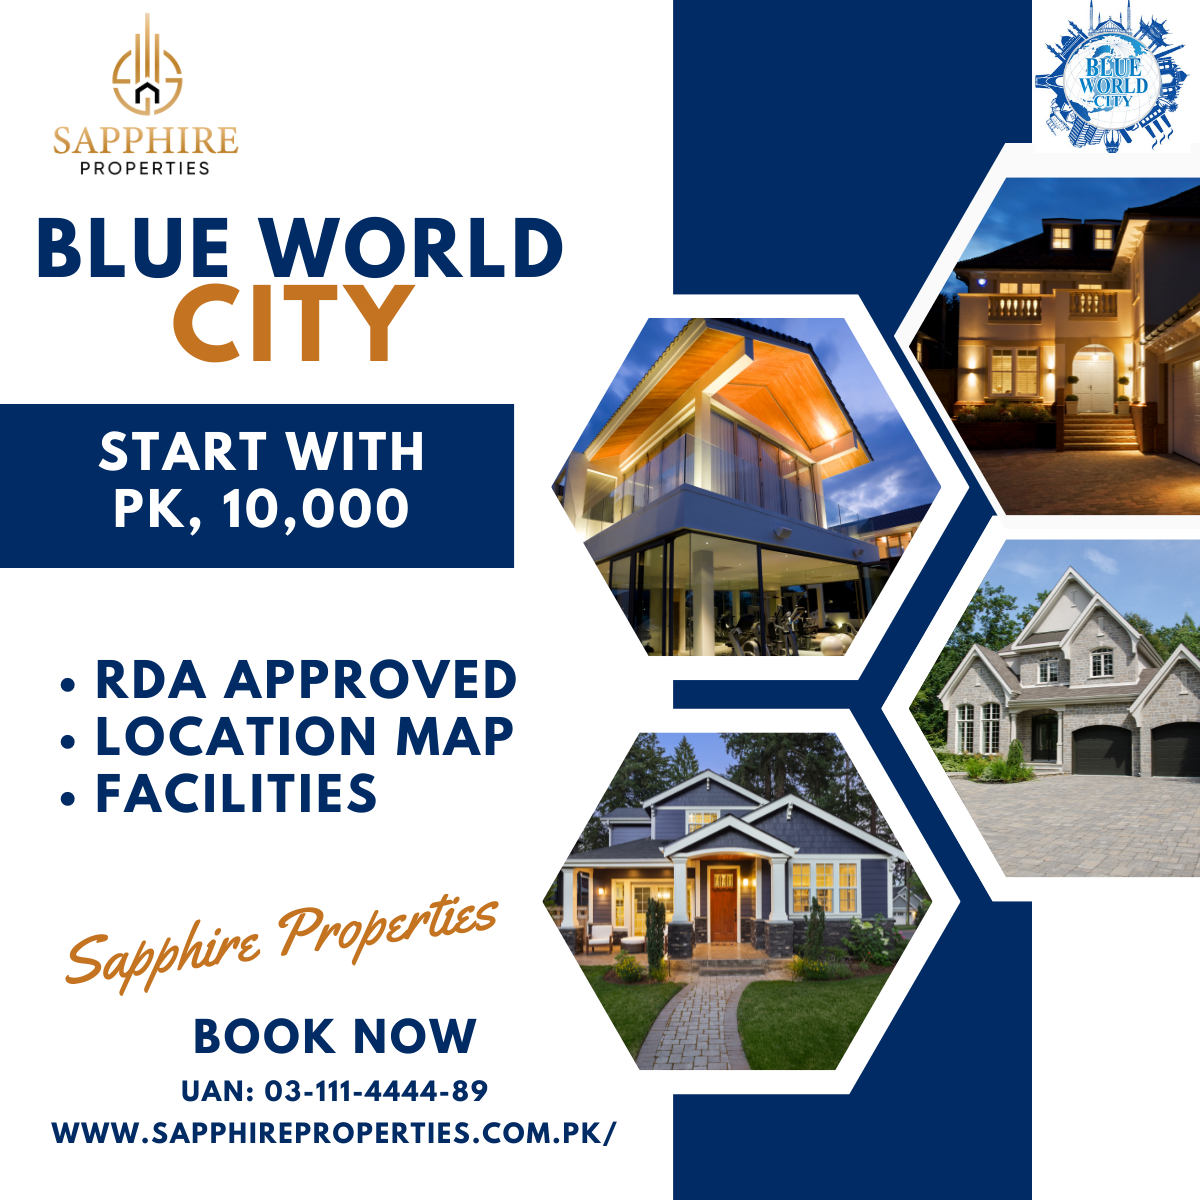 89www - Blue World City | Blue World City Location | Sapphire Properties -  DavidSEO-001 - Medium